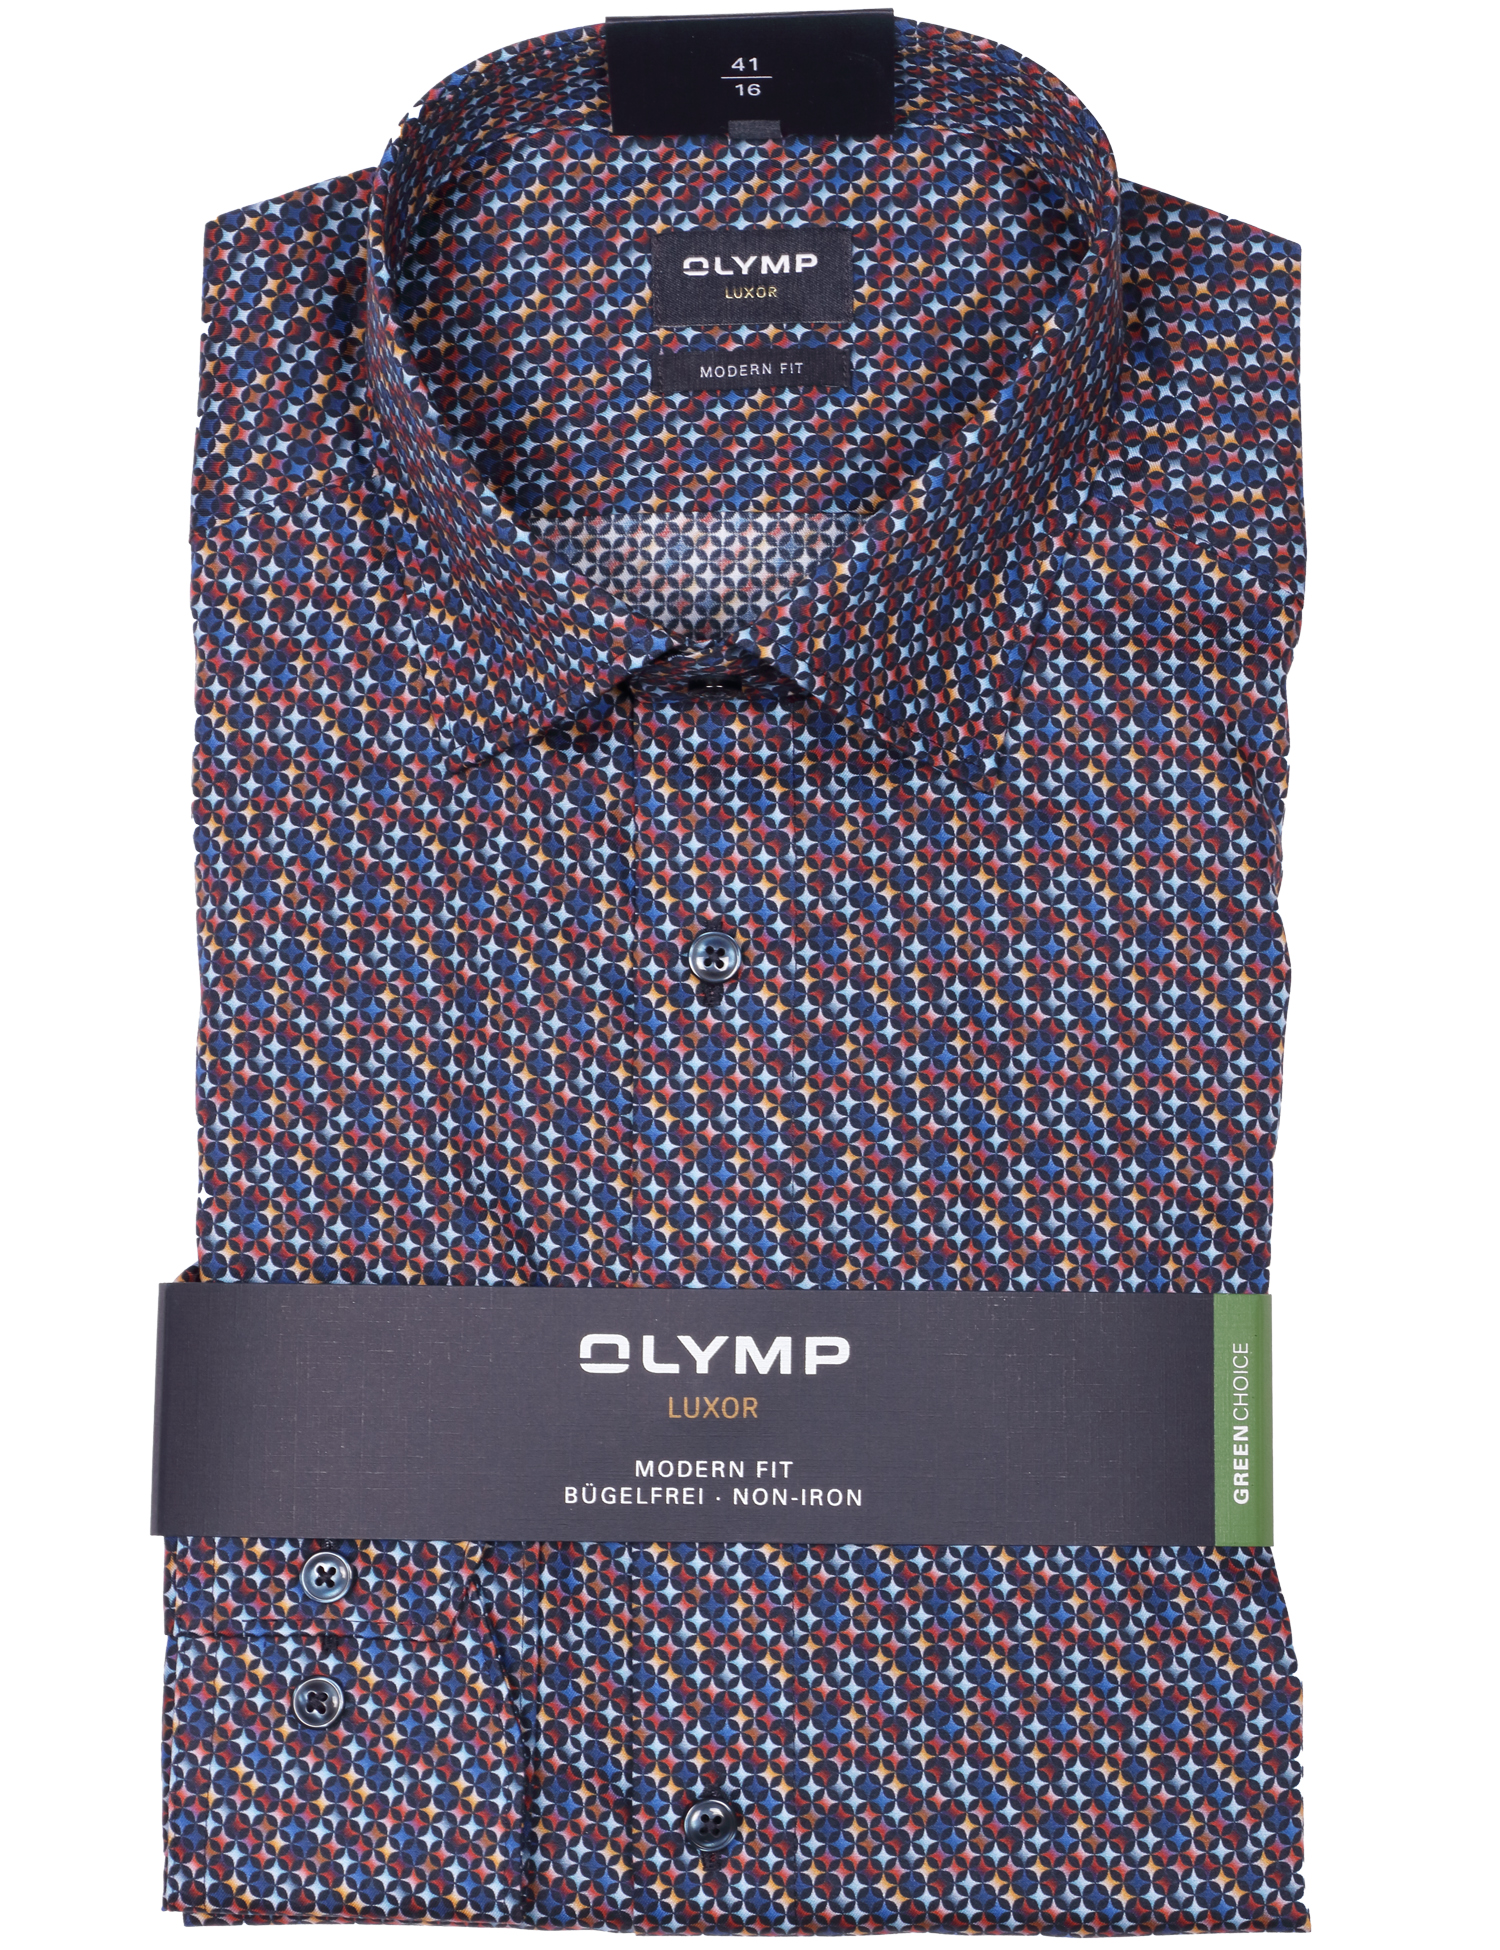 Olymp Hemd Luxor modern fit - blau 40